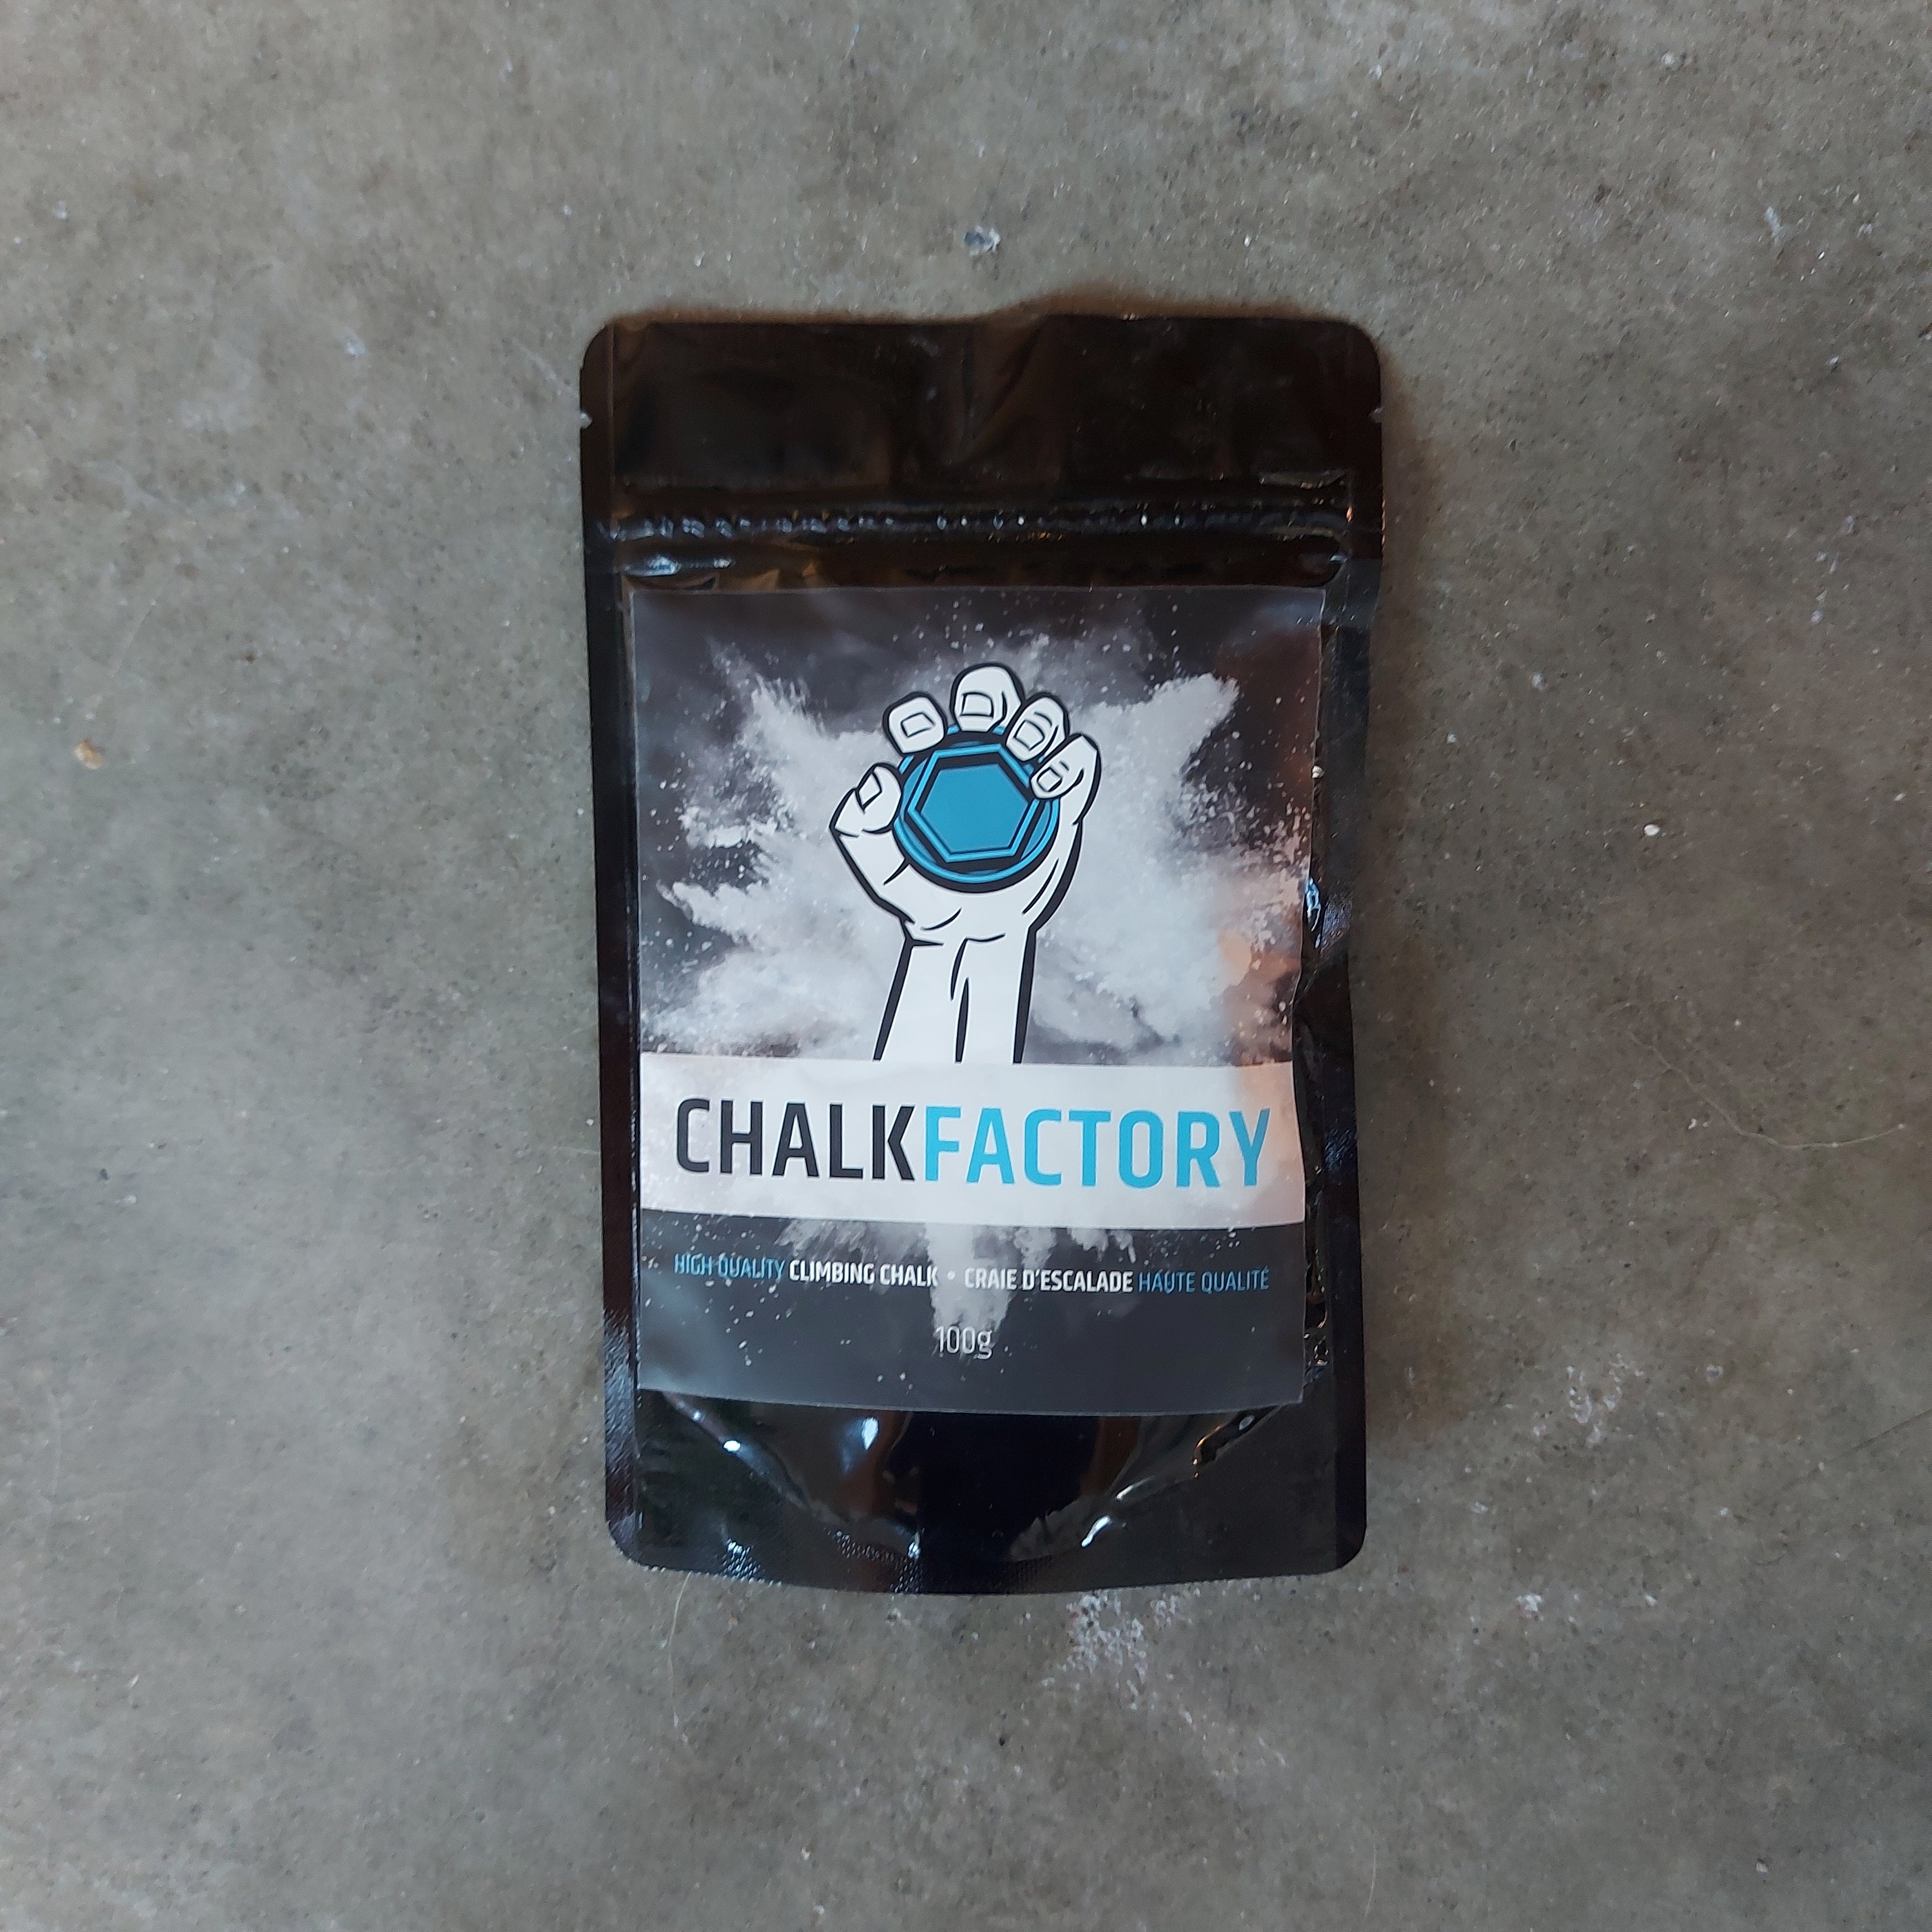 Chalkfactory. - in powder